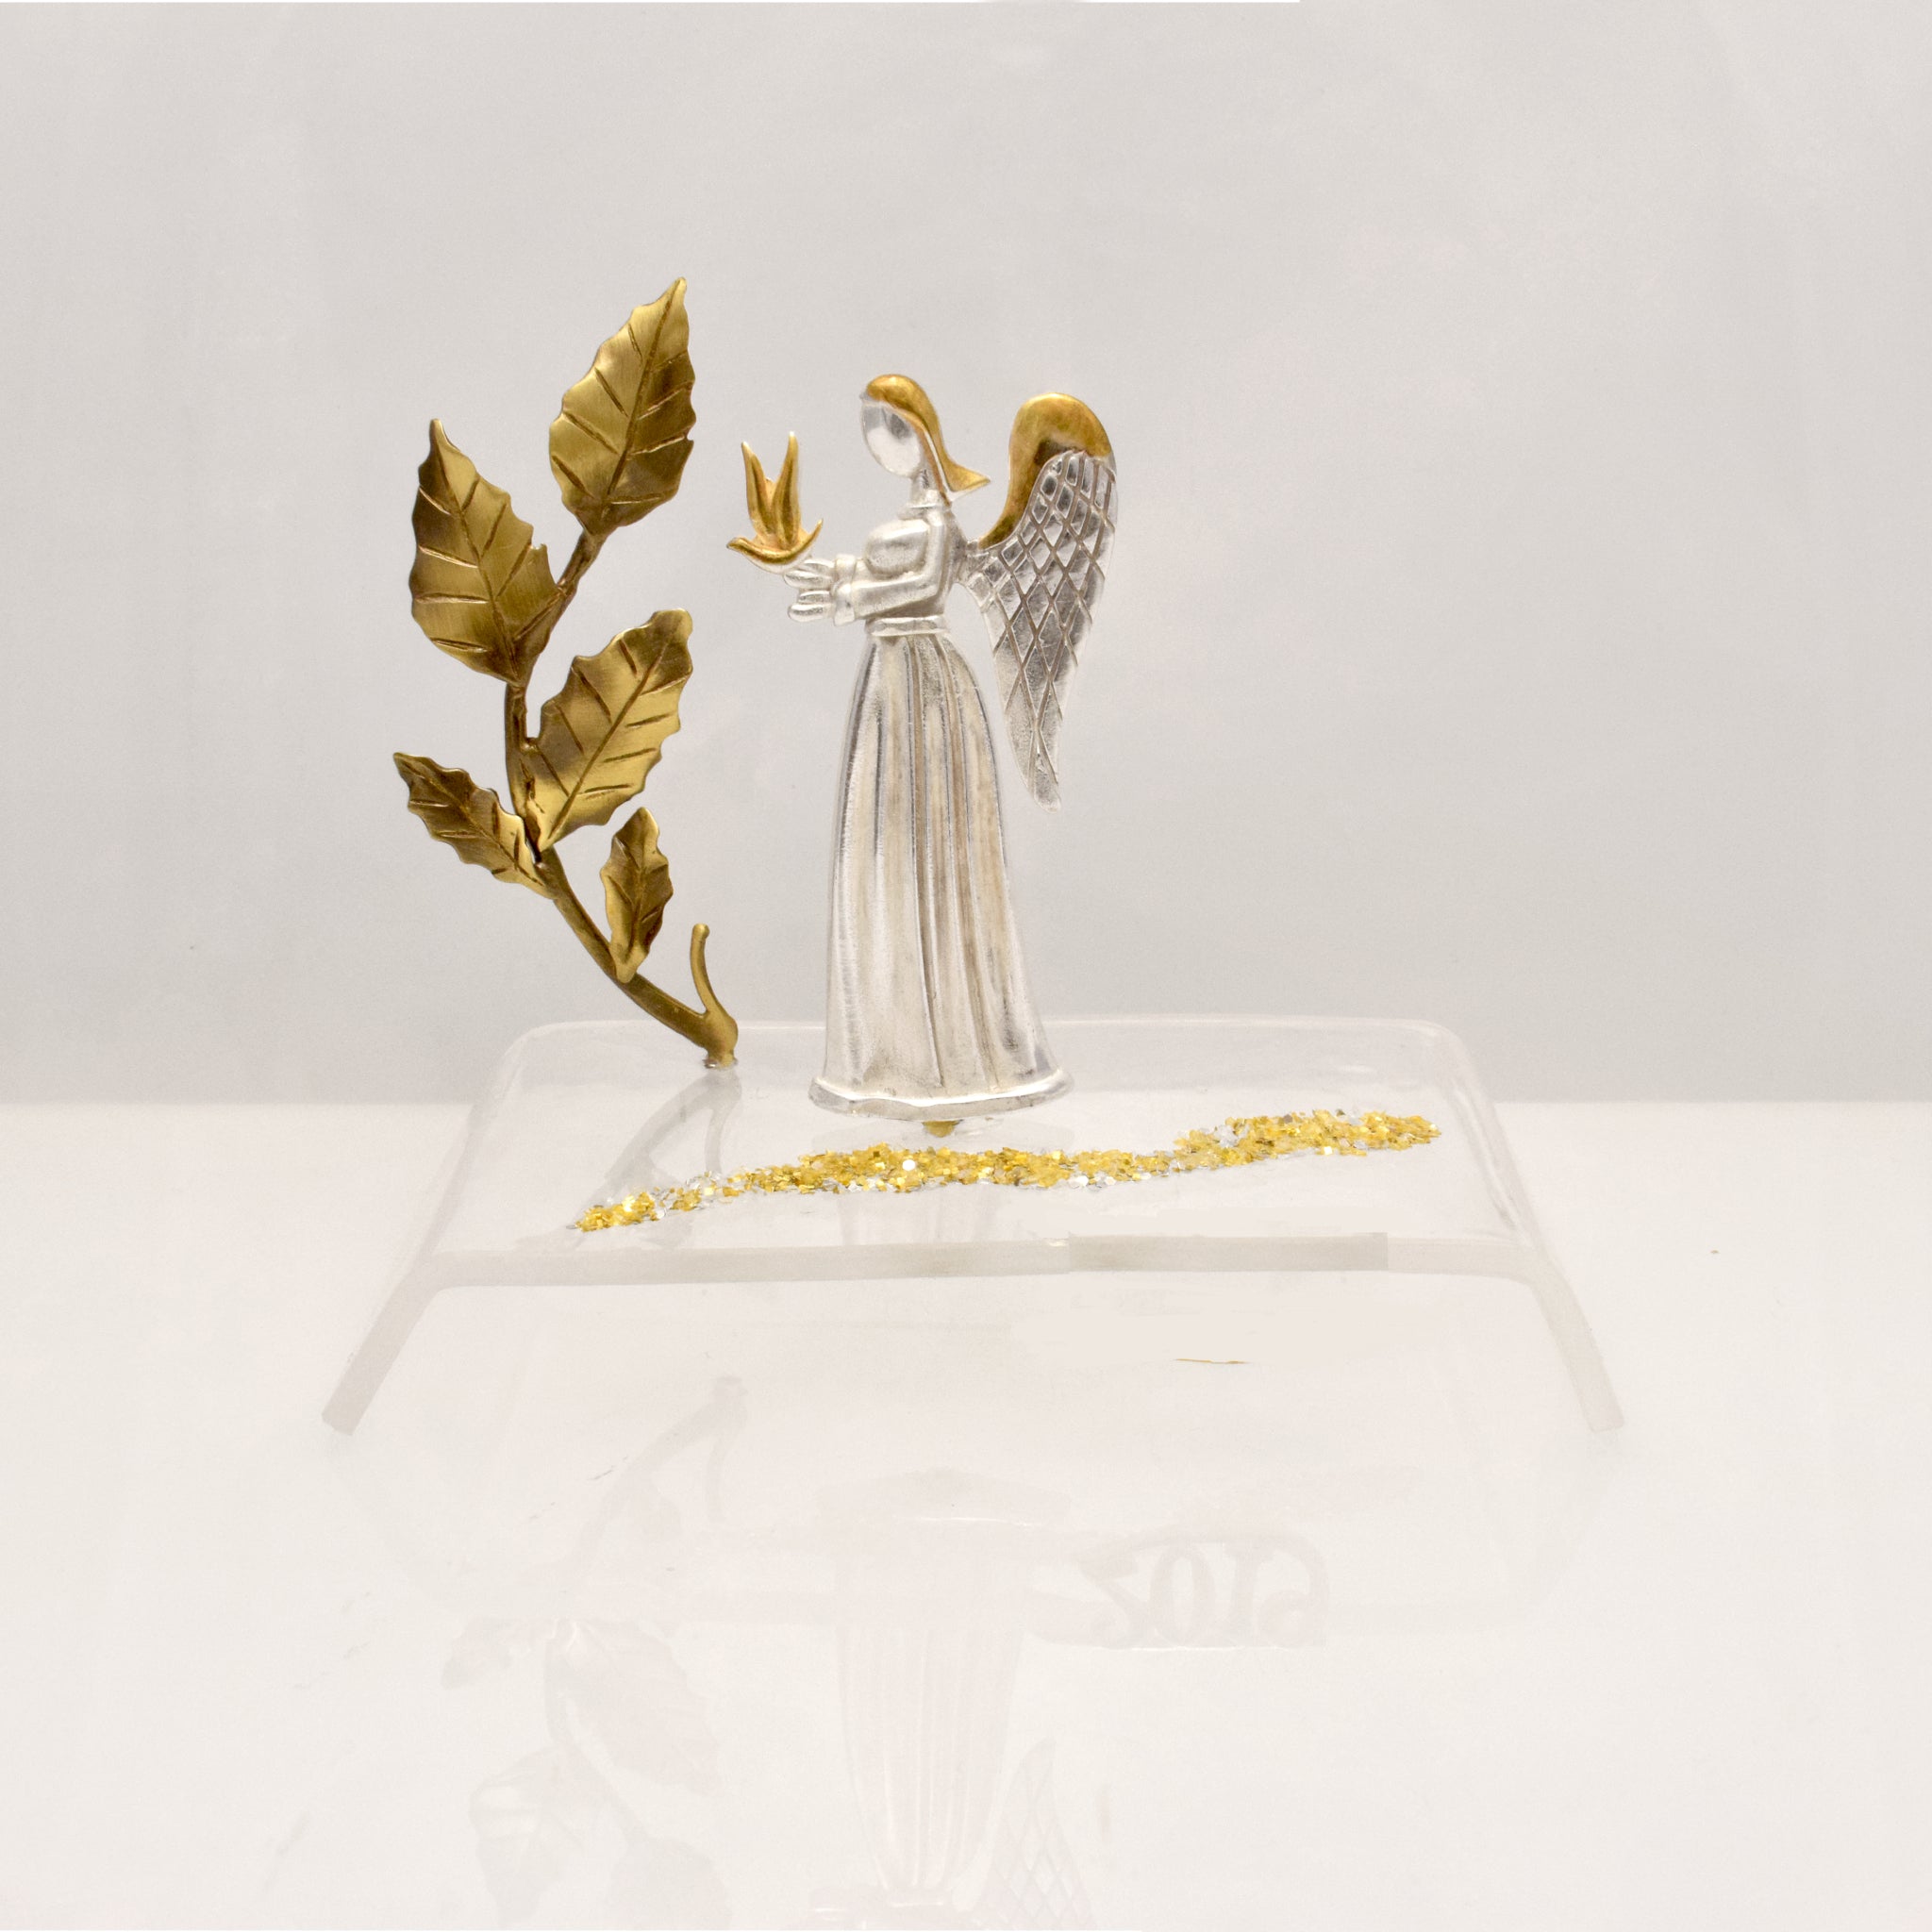 Angel Charm on plexiglass, silver charm with bronze leaves, home decor, gift idea, charm favor (PX-10) - ELEFTHERIOU EL